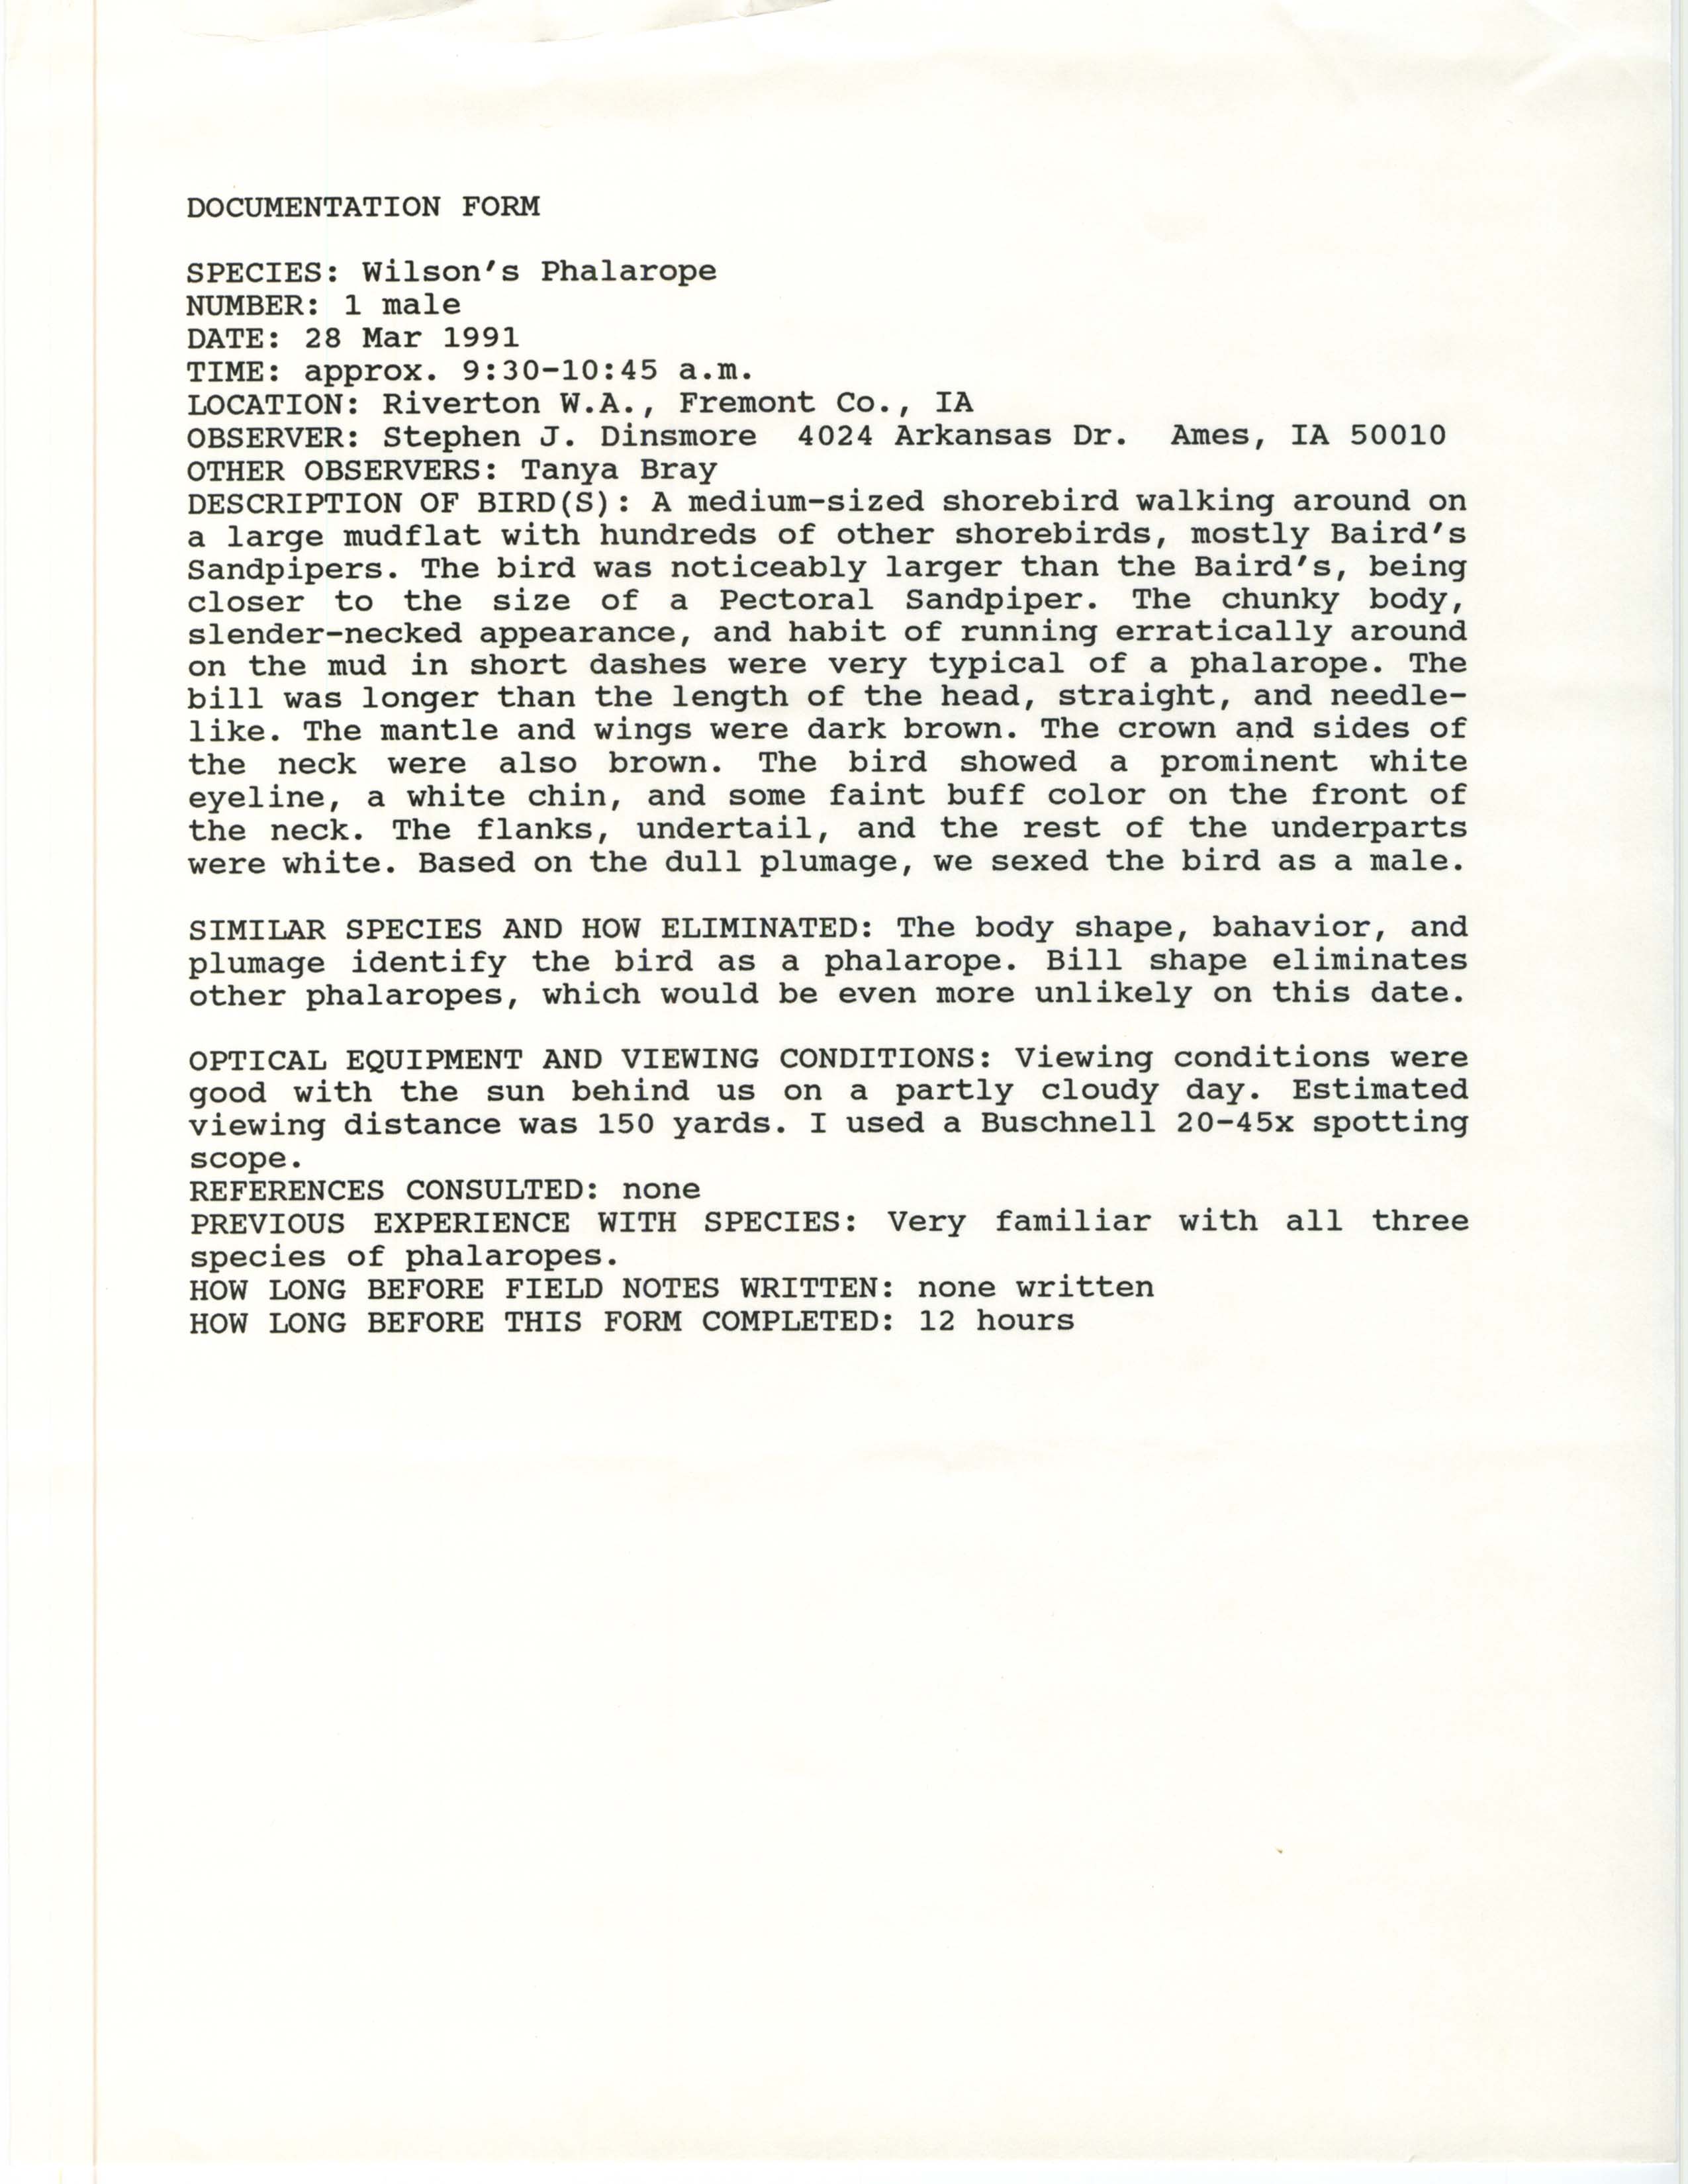 Rare bird documentation form for Wilson's Phalarope at Riverton Wildlife Area, 1991